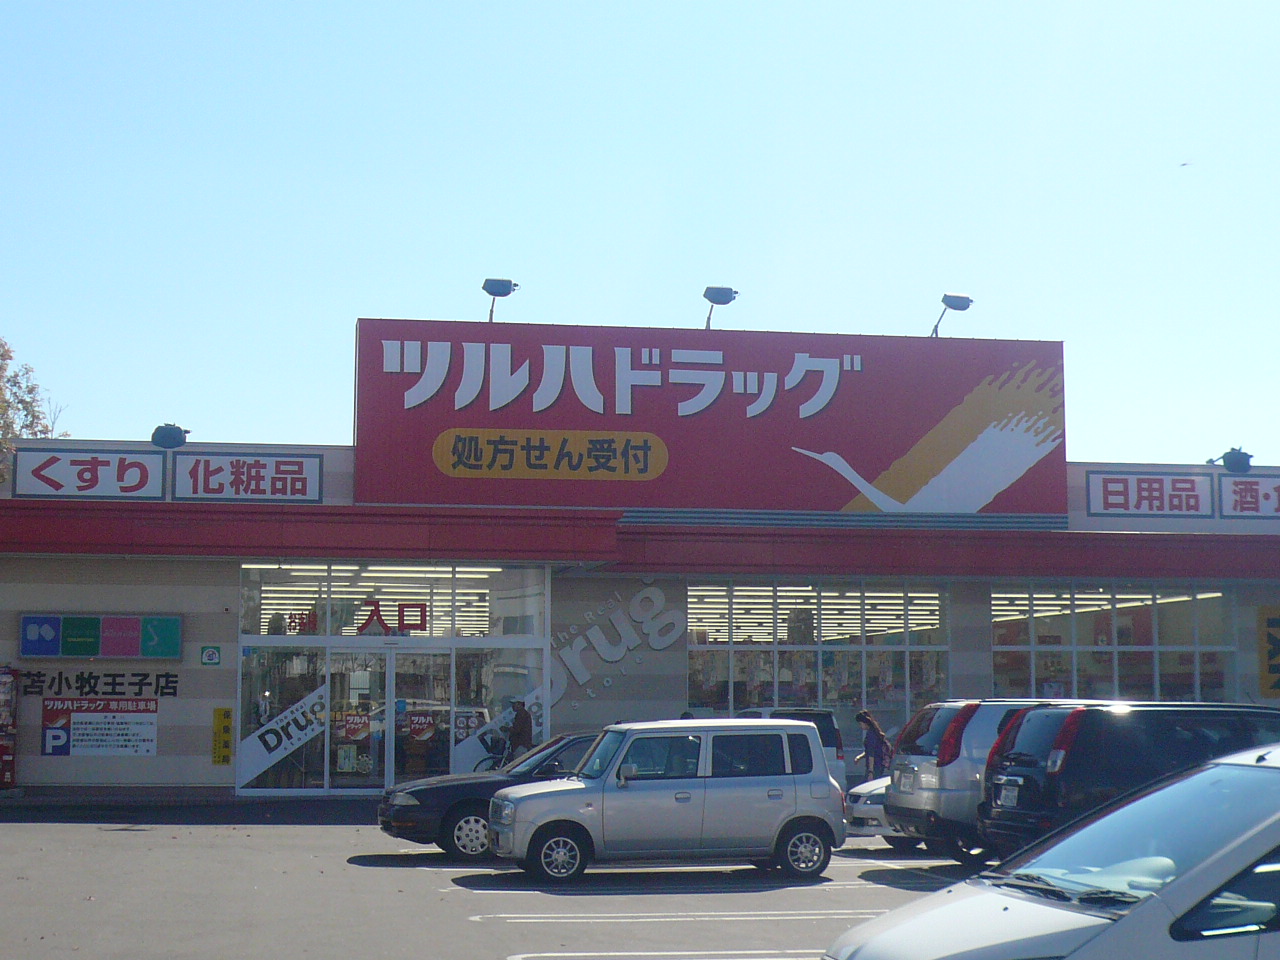 Dorakkusutoa. Tsuruha drag Tomakomai Prince shop 1291m until (drugstore)